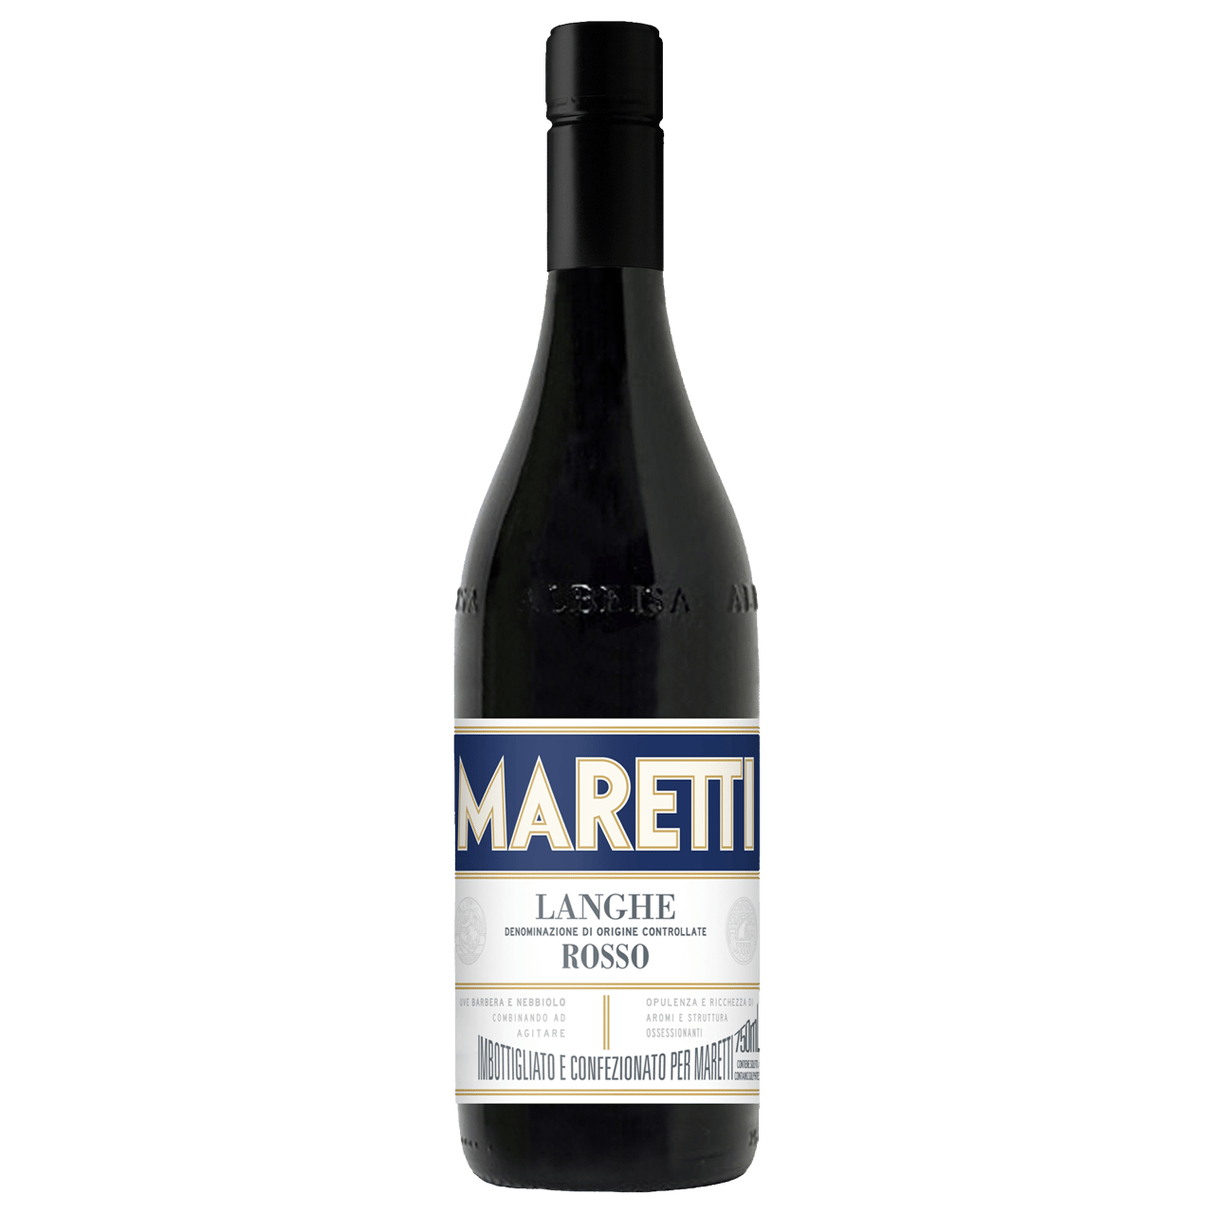 Maretti "Langhe Rosso" Barbera Nebbiolo DOC 2020 (12 bottles)